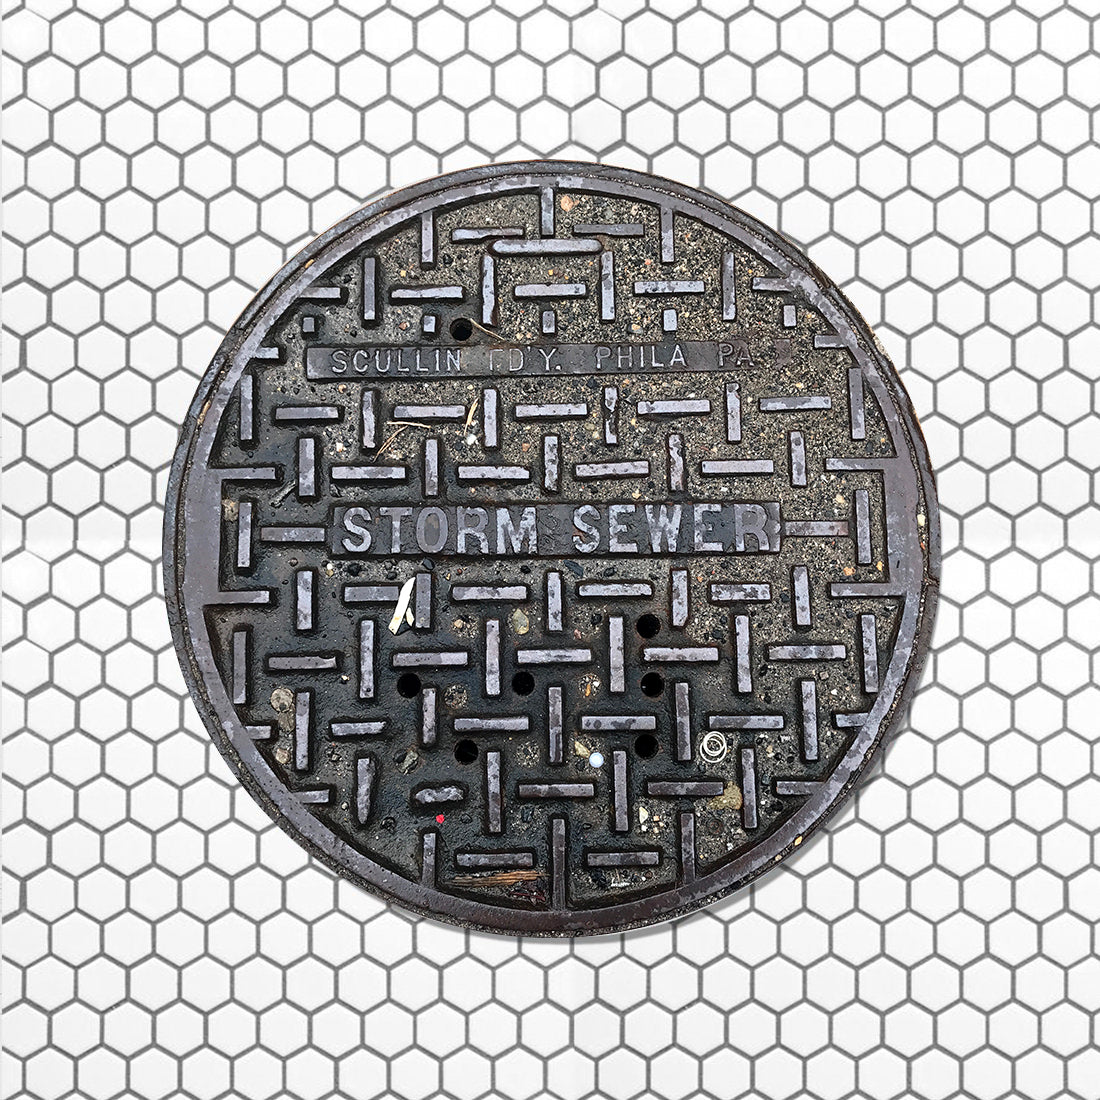 EAST SERIES - Sewer Cover Doormat, Trivet, Coaster - Philadelphia, PA